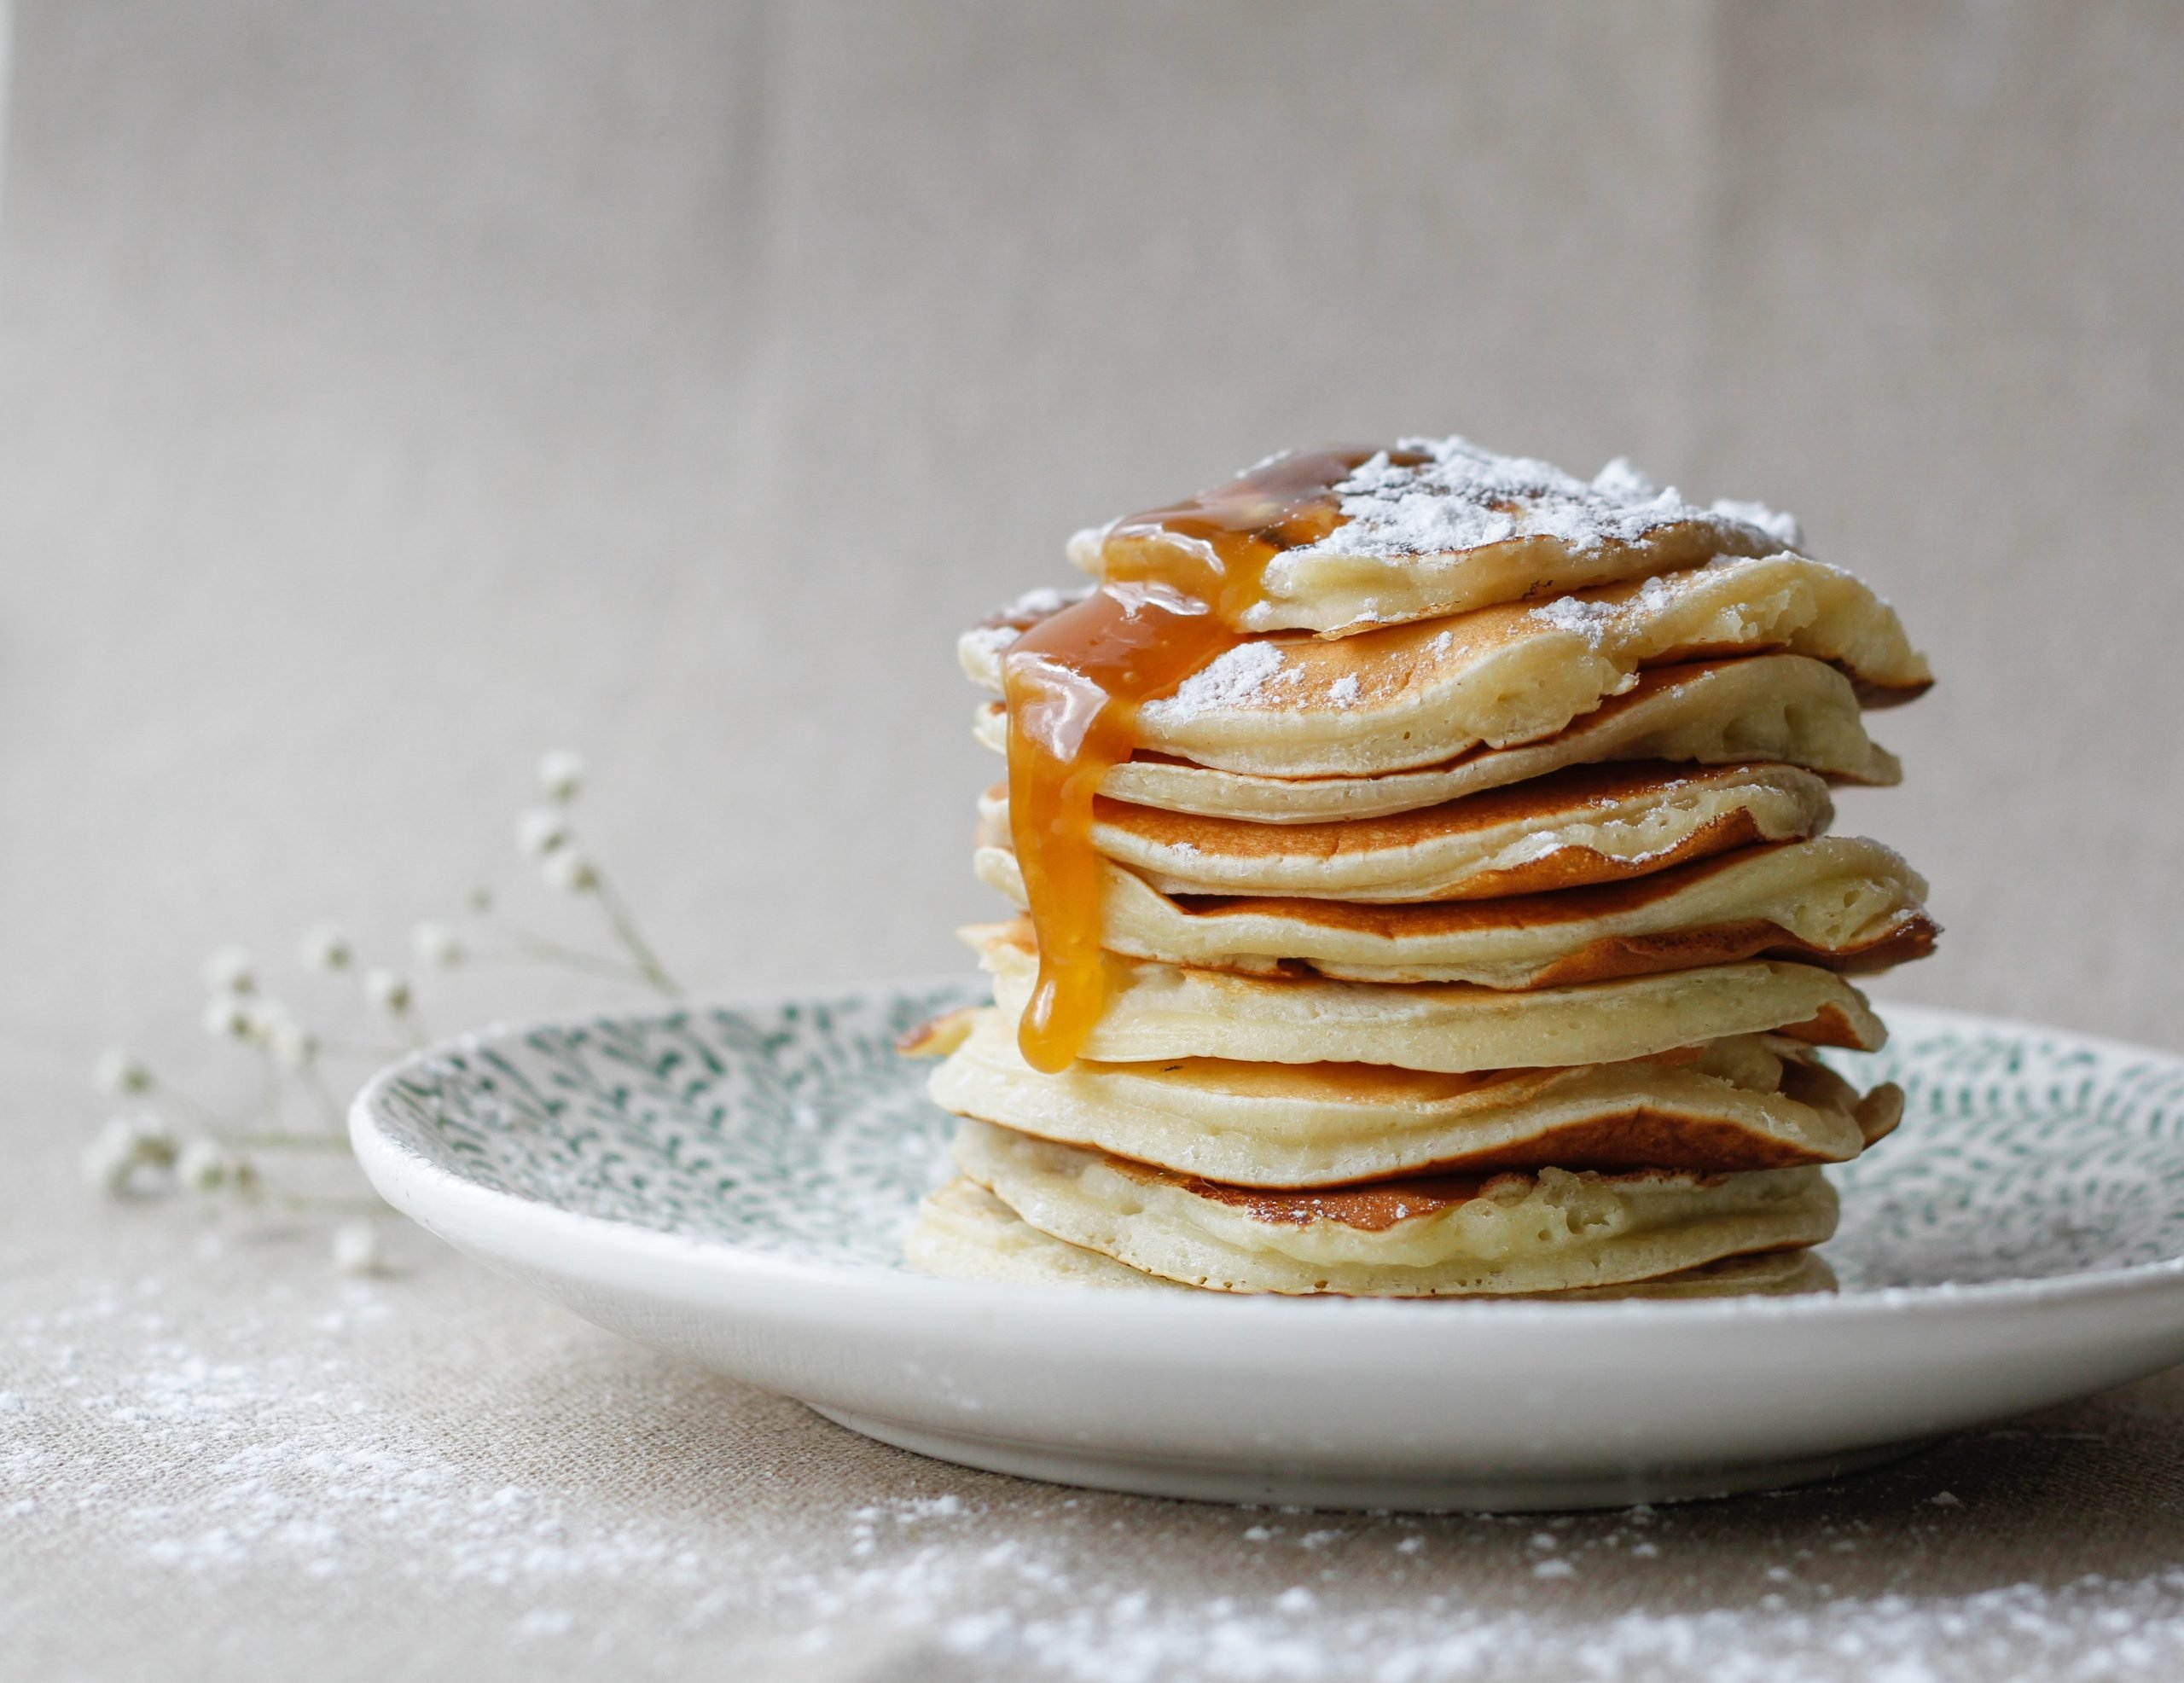 Alimenti: richiamo per pancakes Bernard Jarnoux, rischio listeria